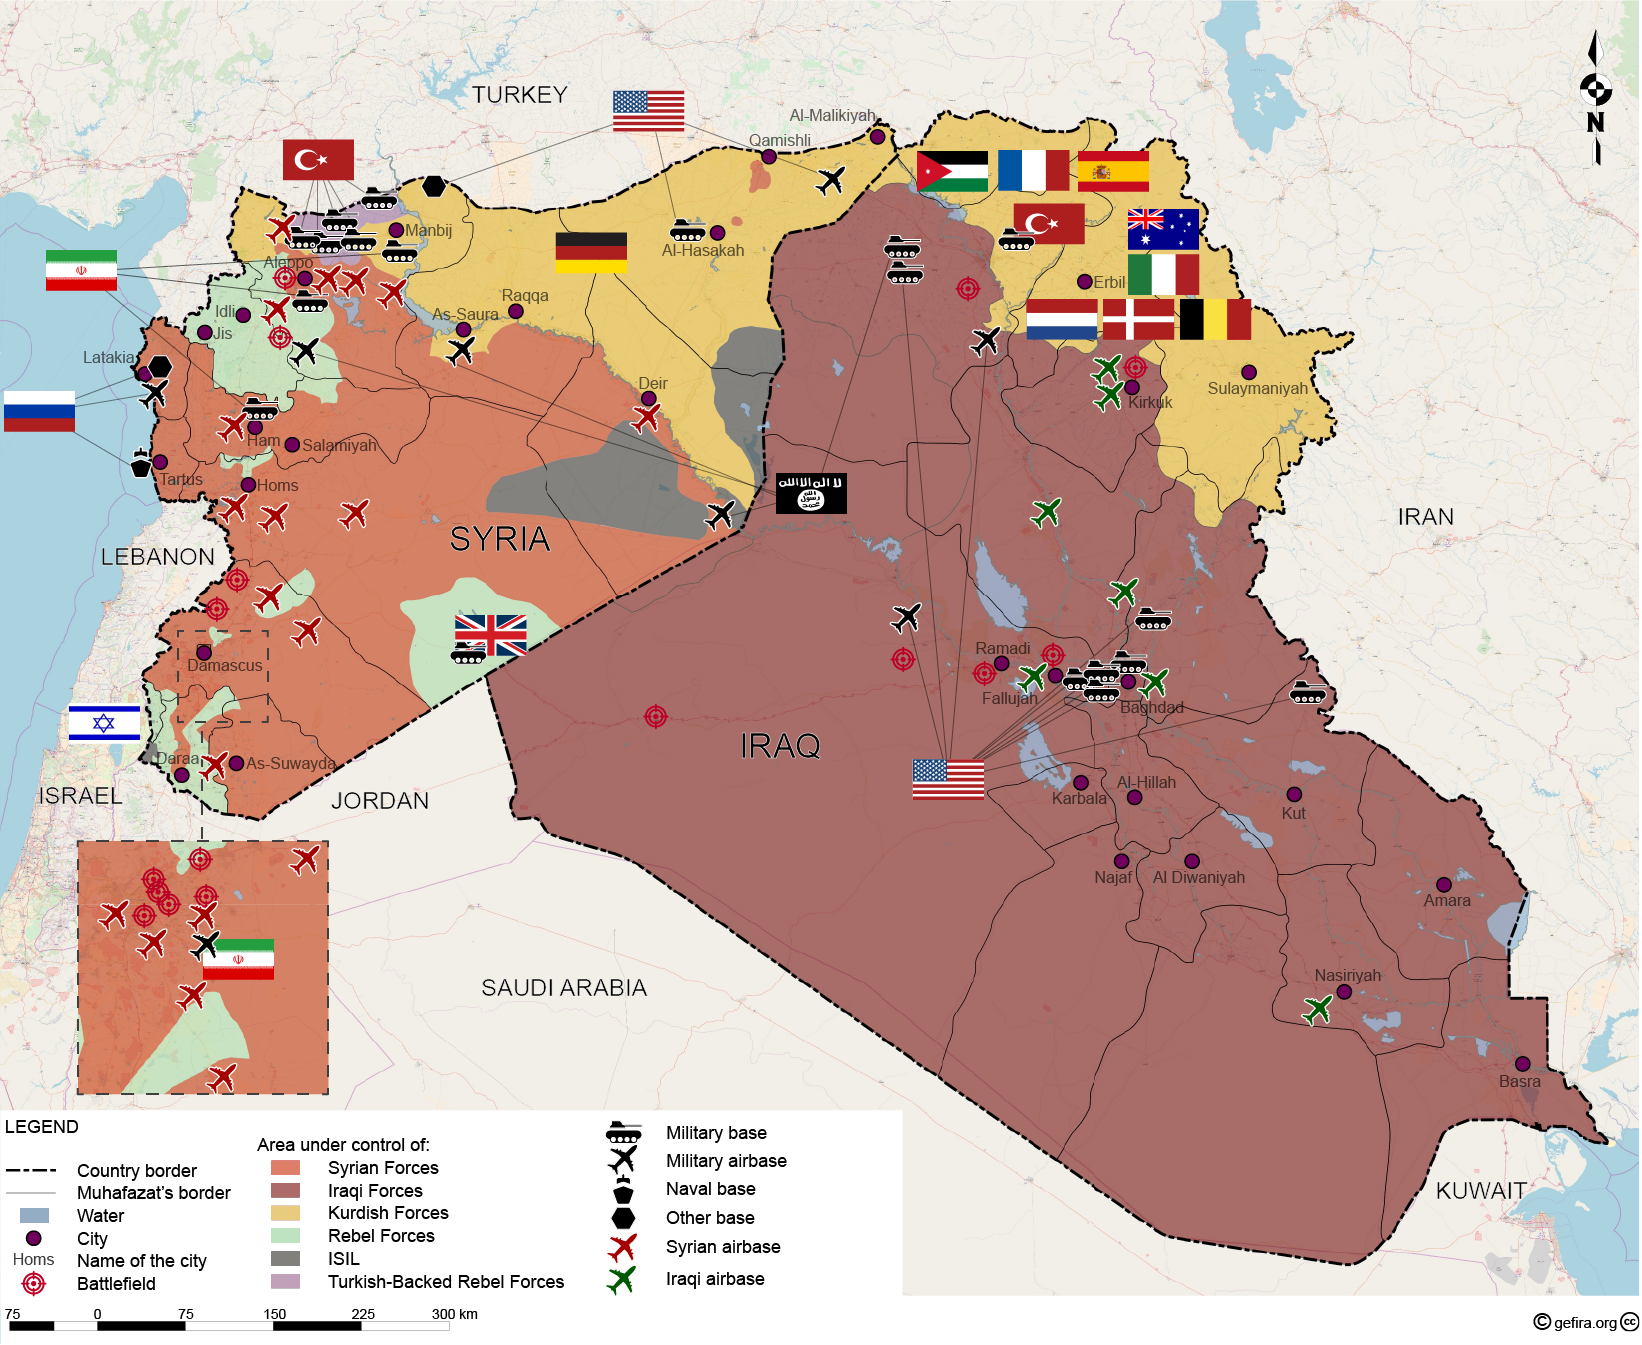 World War III in Syria and Iraq (MAP) | GEFIRA